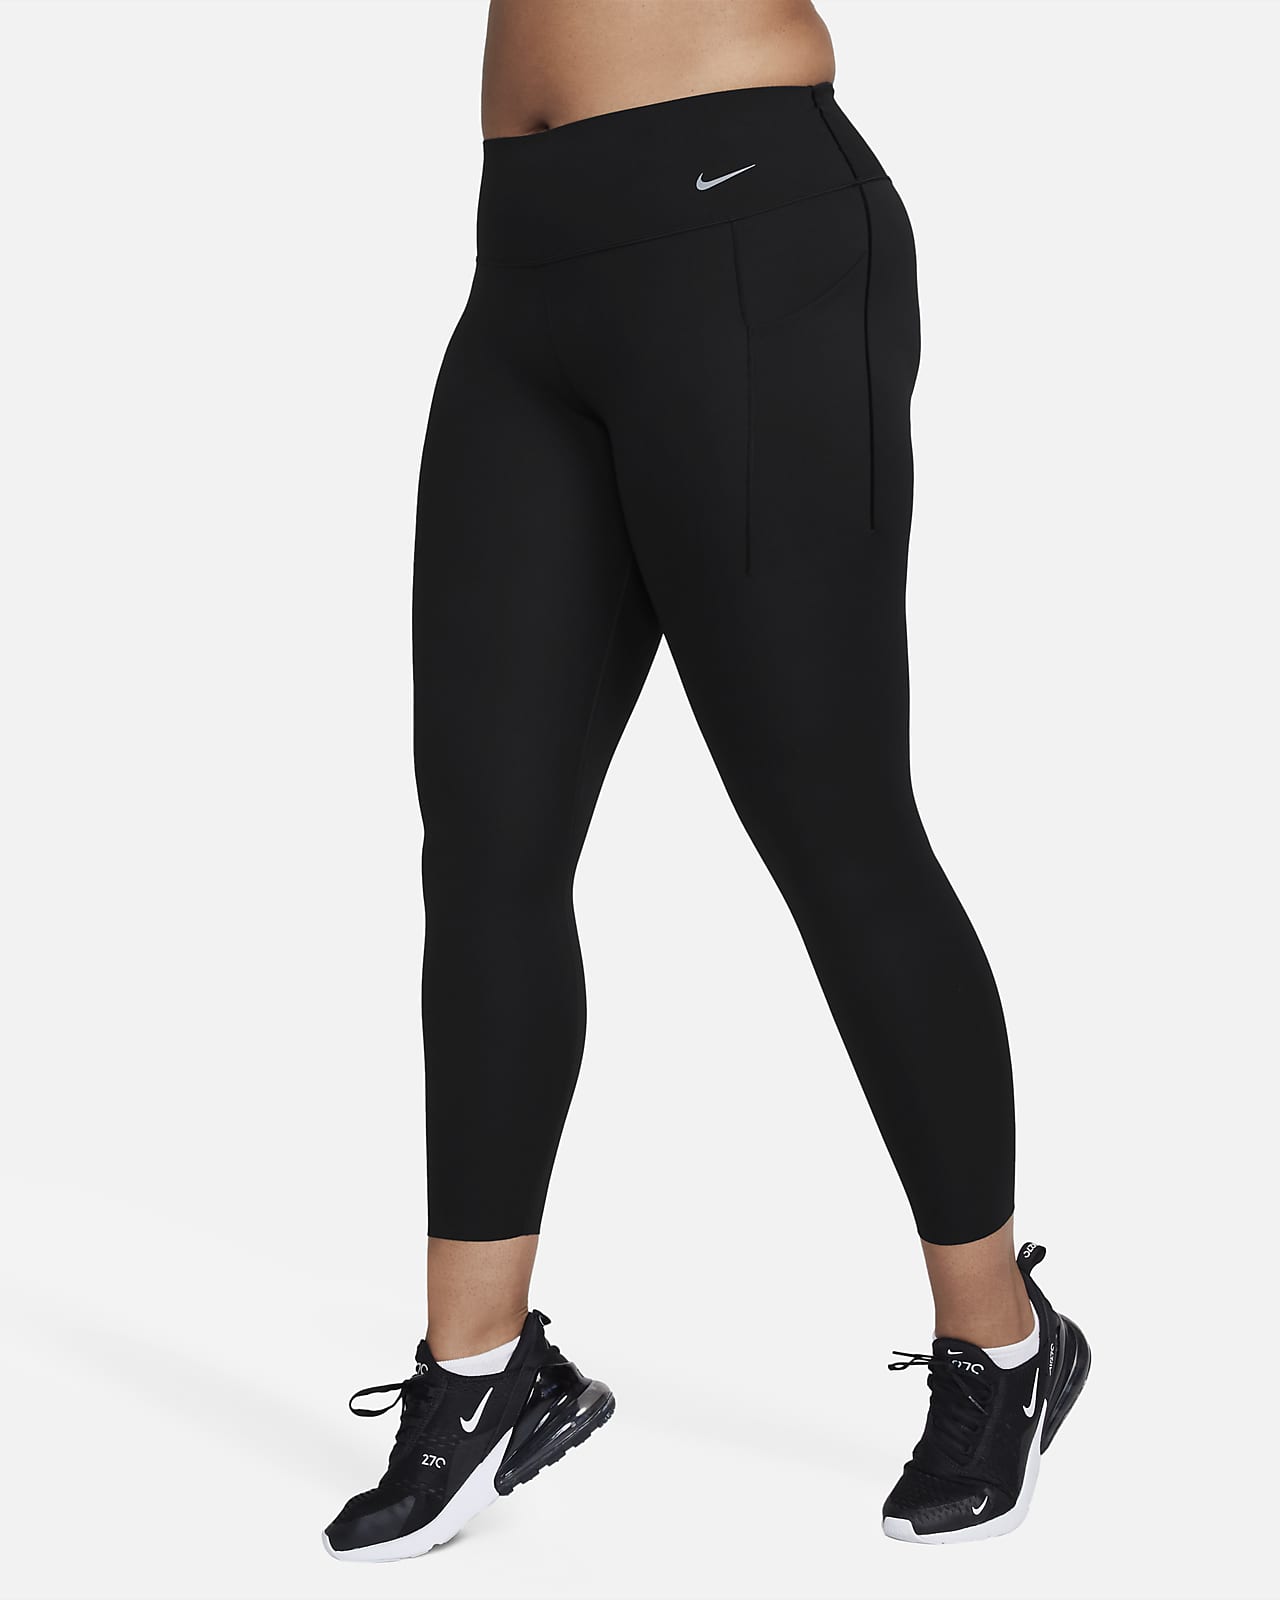 Size XS Nike Air Women's 7/8 AIR LOGO Zip Pocket Running Tights